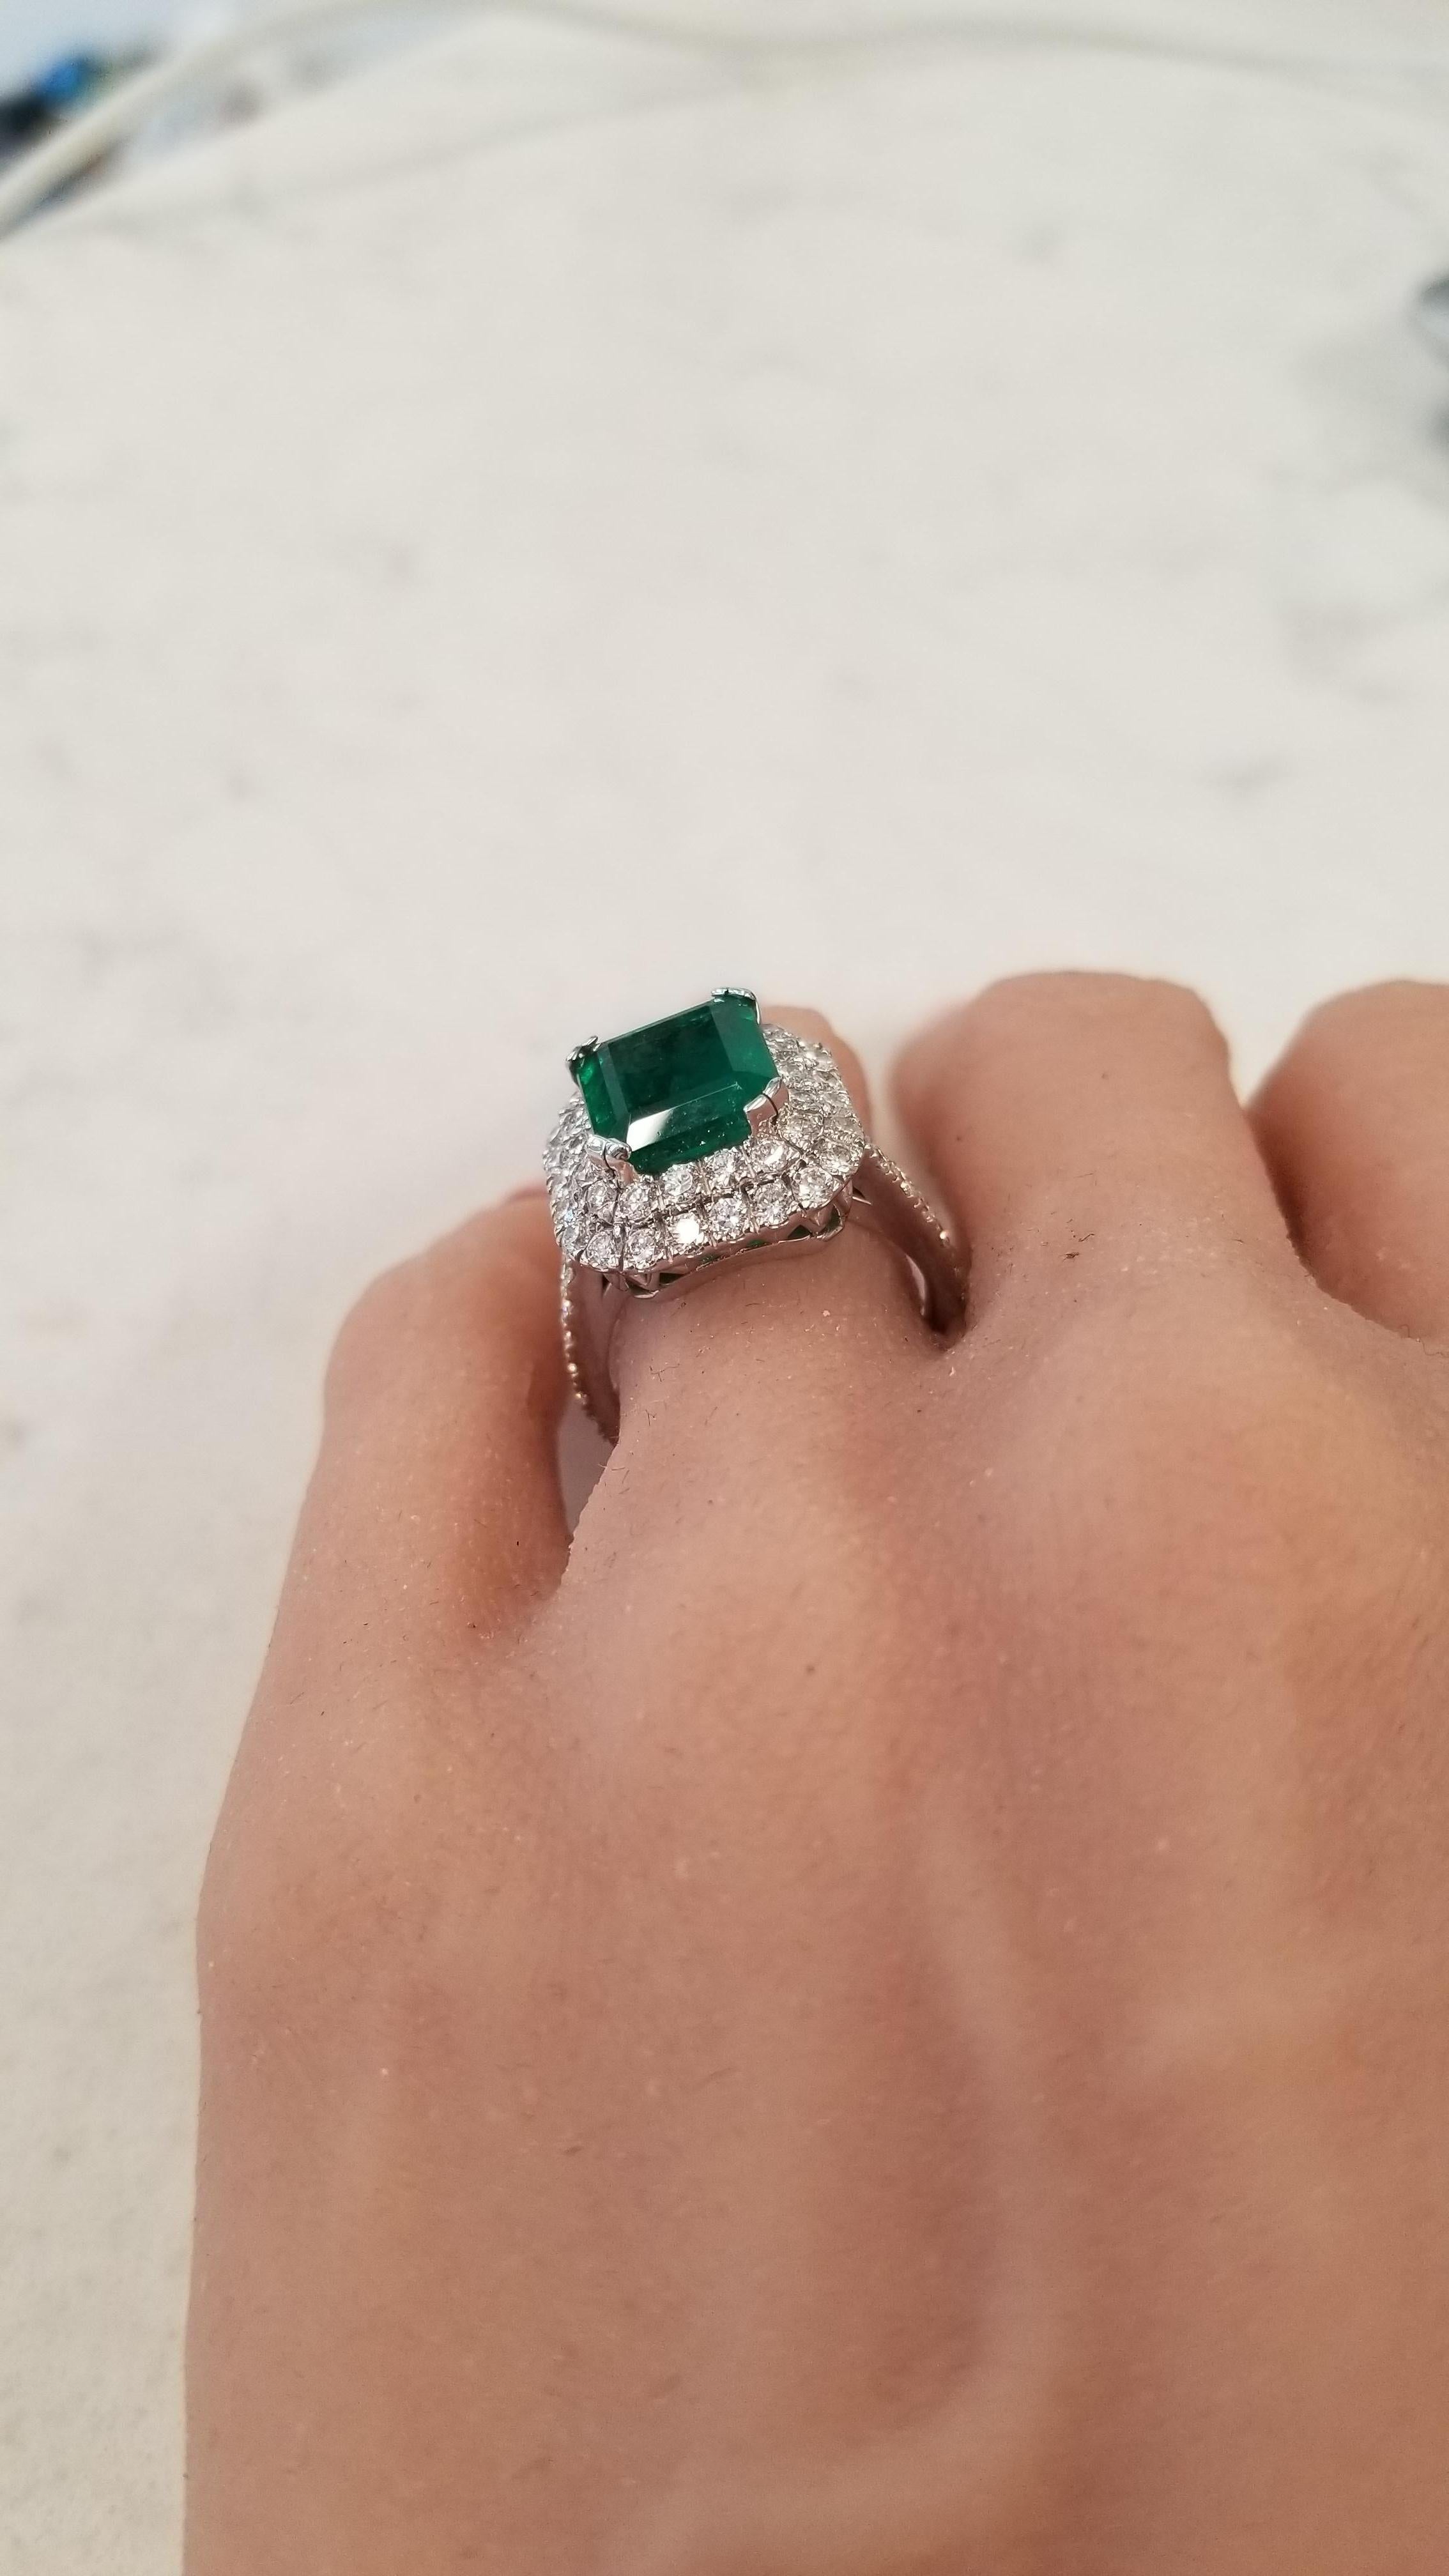 4.09 Carat Emerald Cut Emerald and Diamond Cocktail Ring in 18 Karat White Gold 2